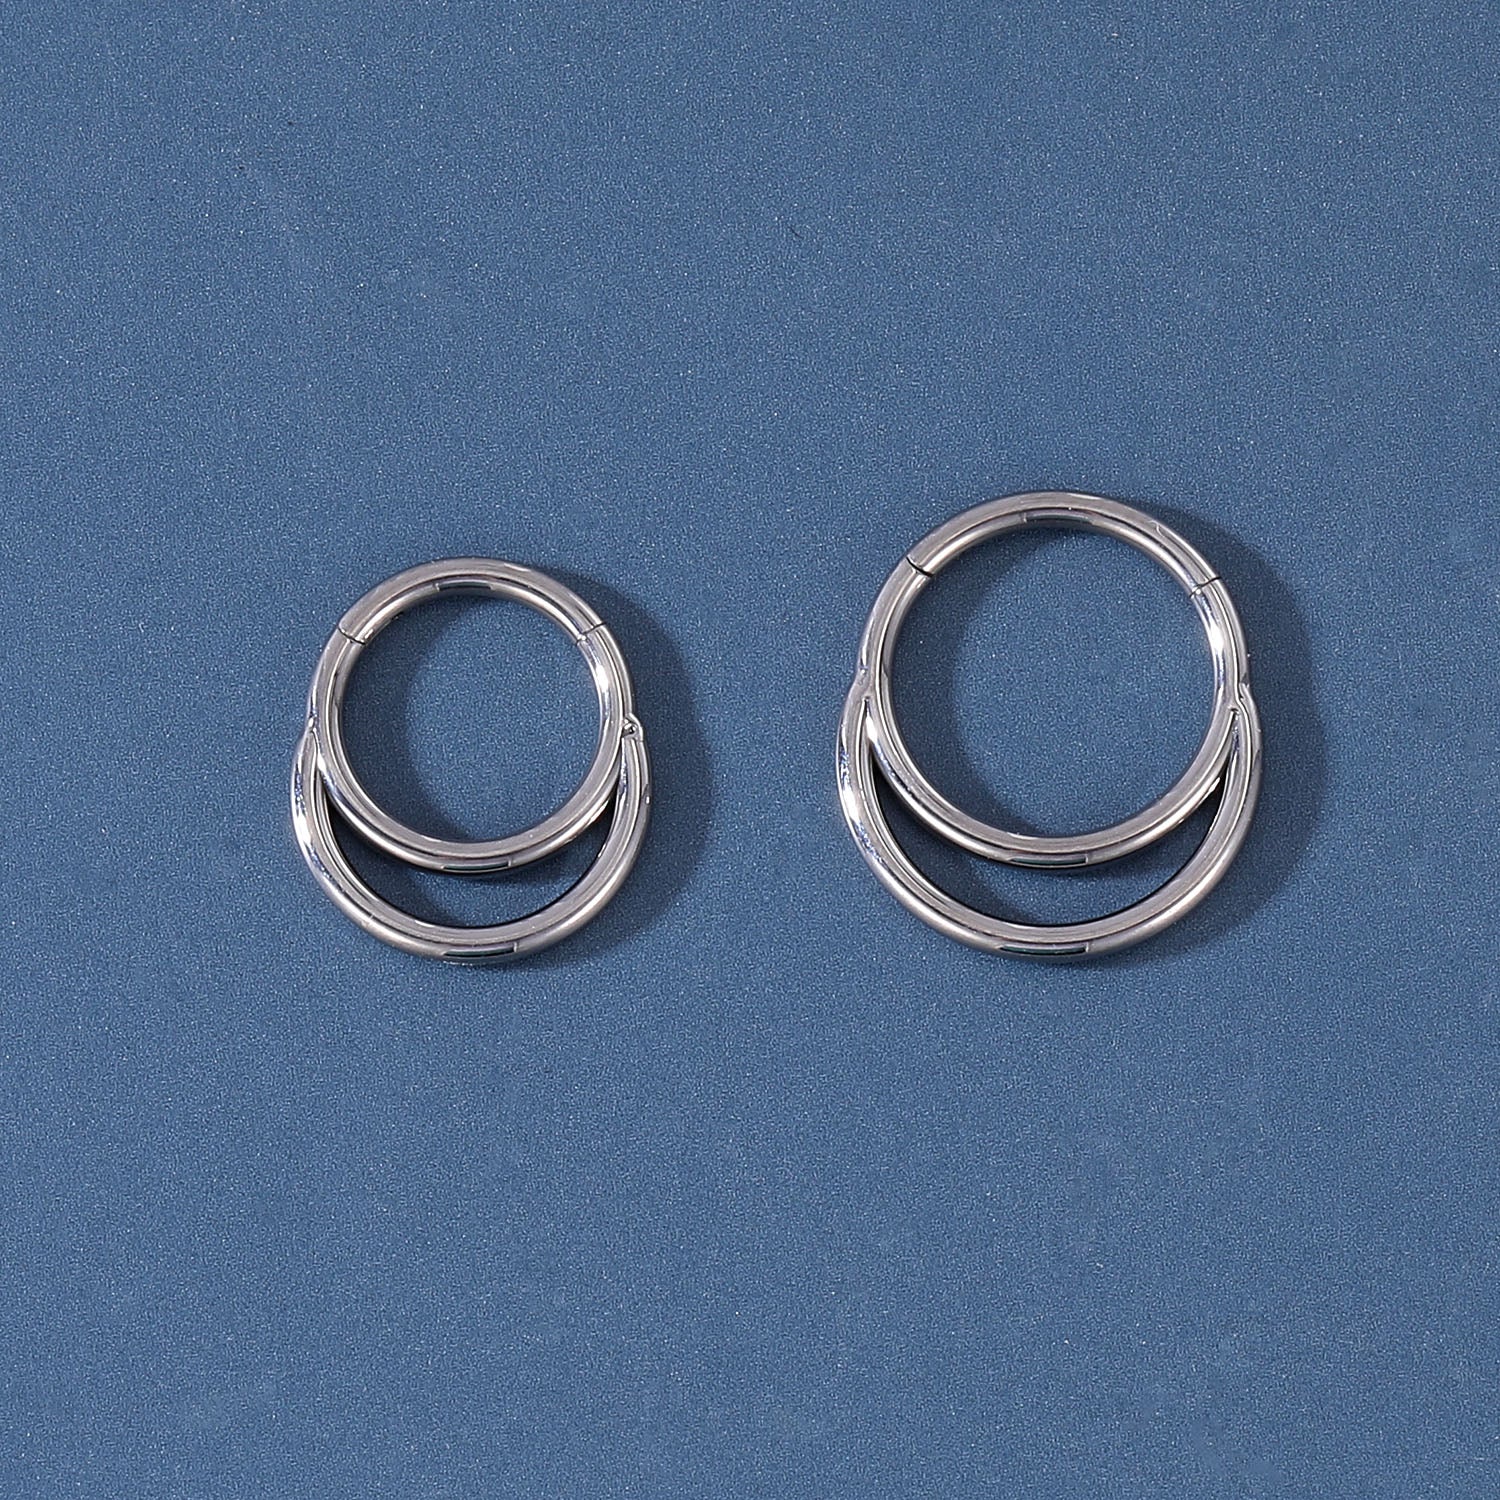 16g-g23-titanium-nose-septum-clicker-moon-conch-helix-cartilage-piercing